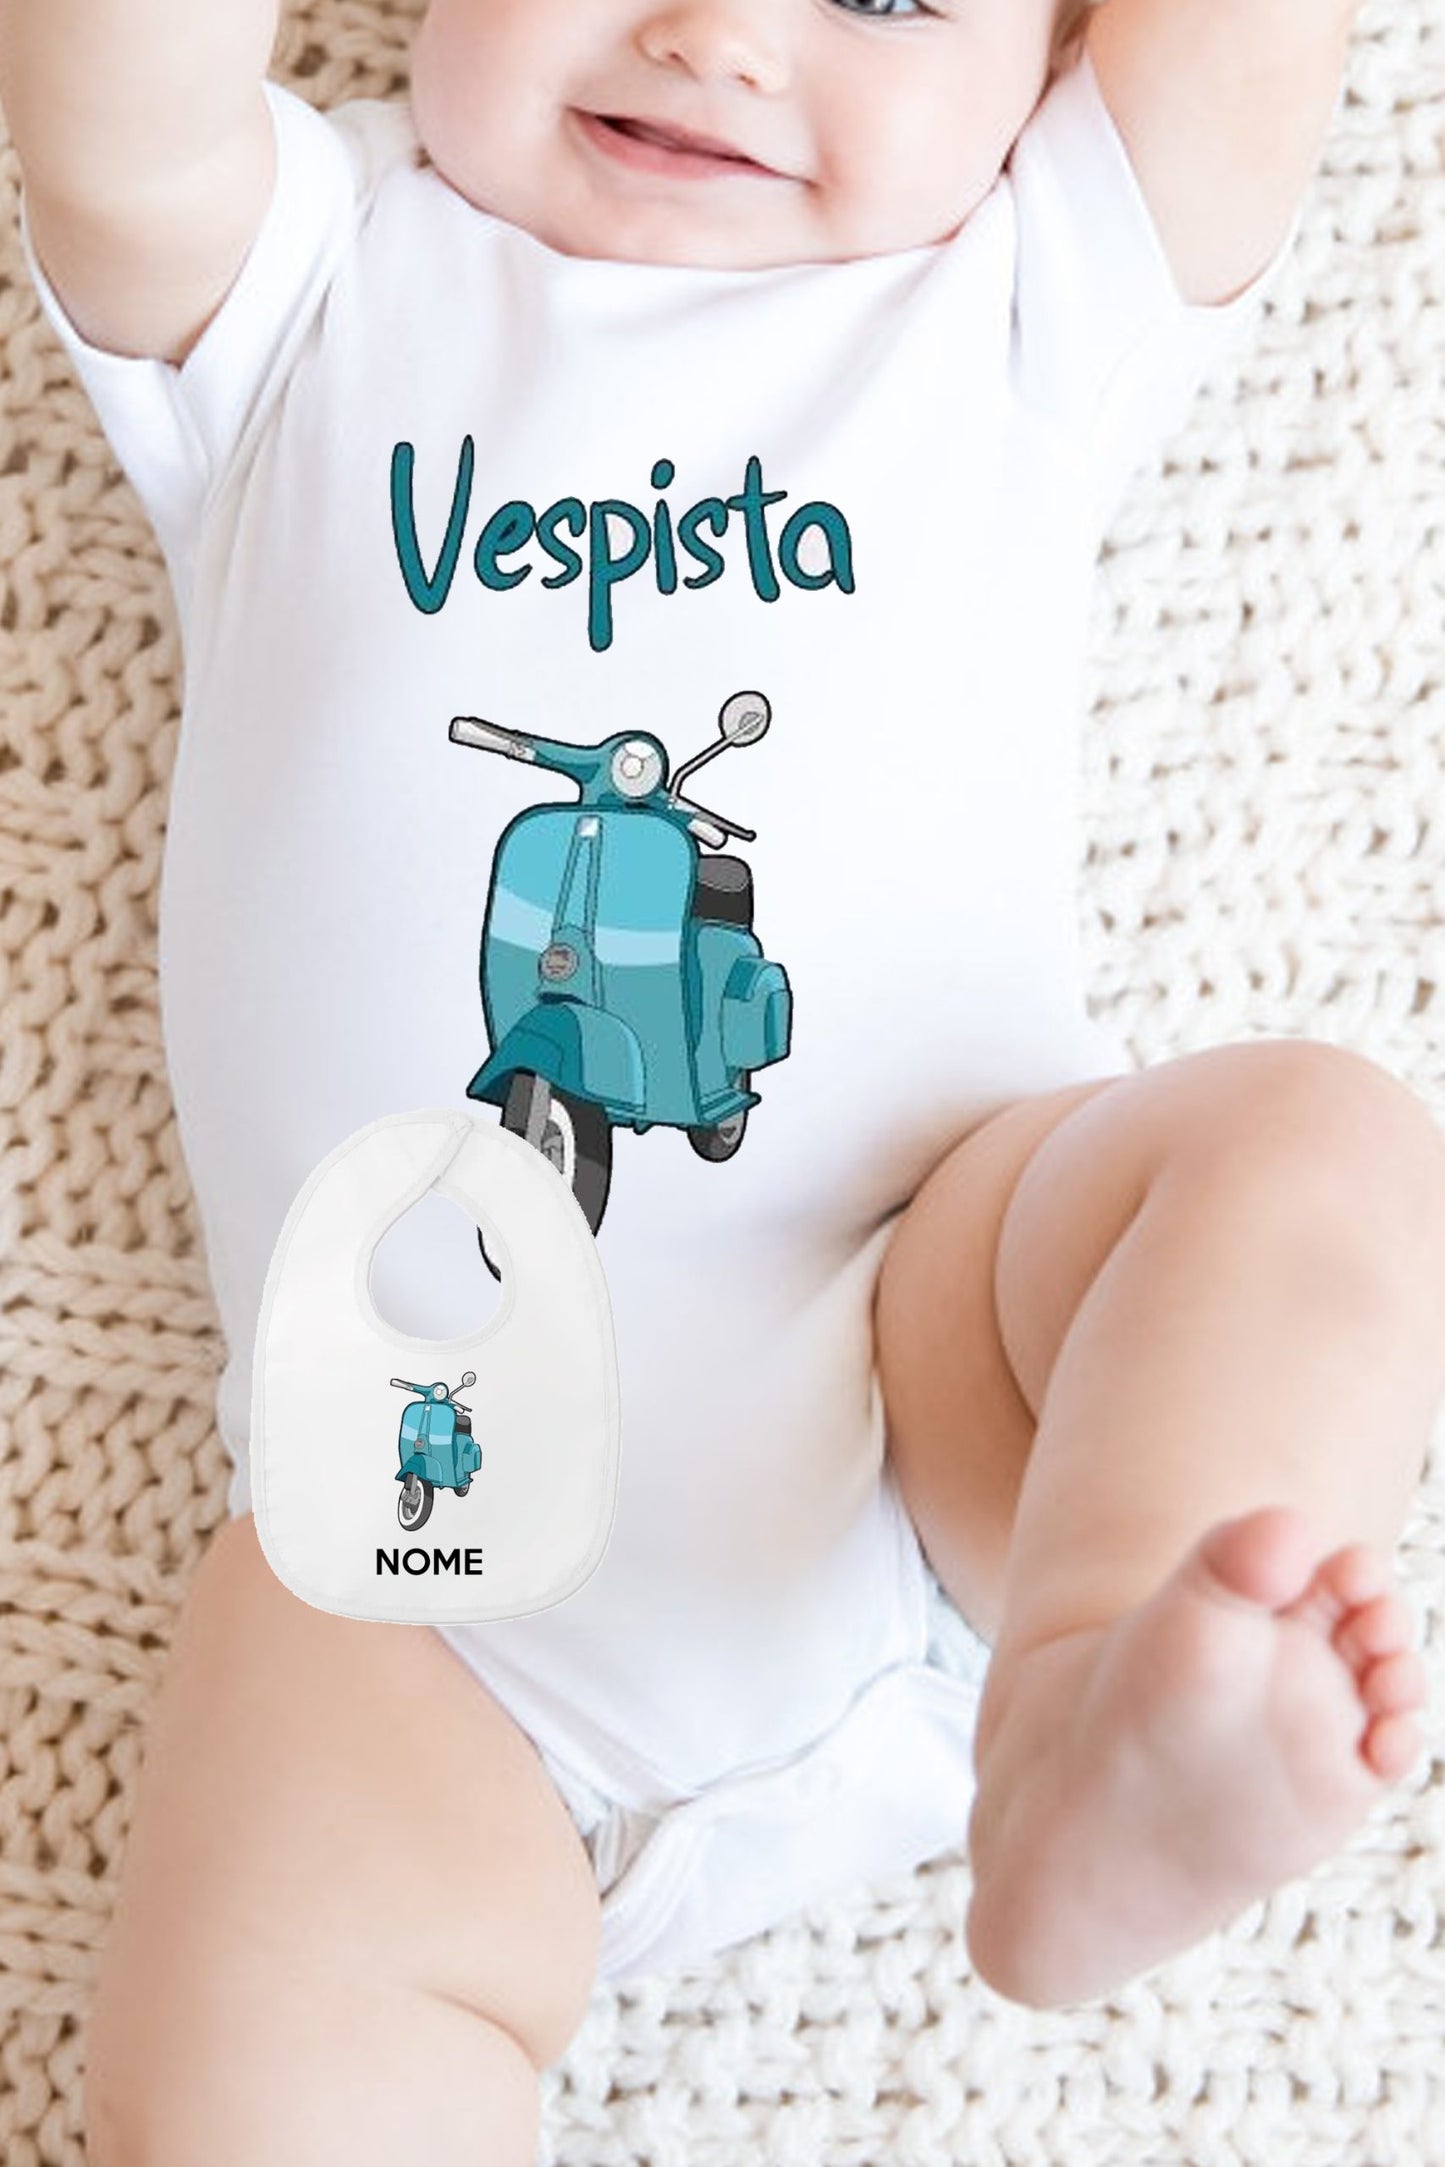 newborn bodysuit with bib - vespa motorbike